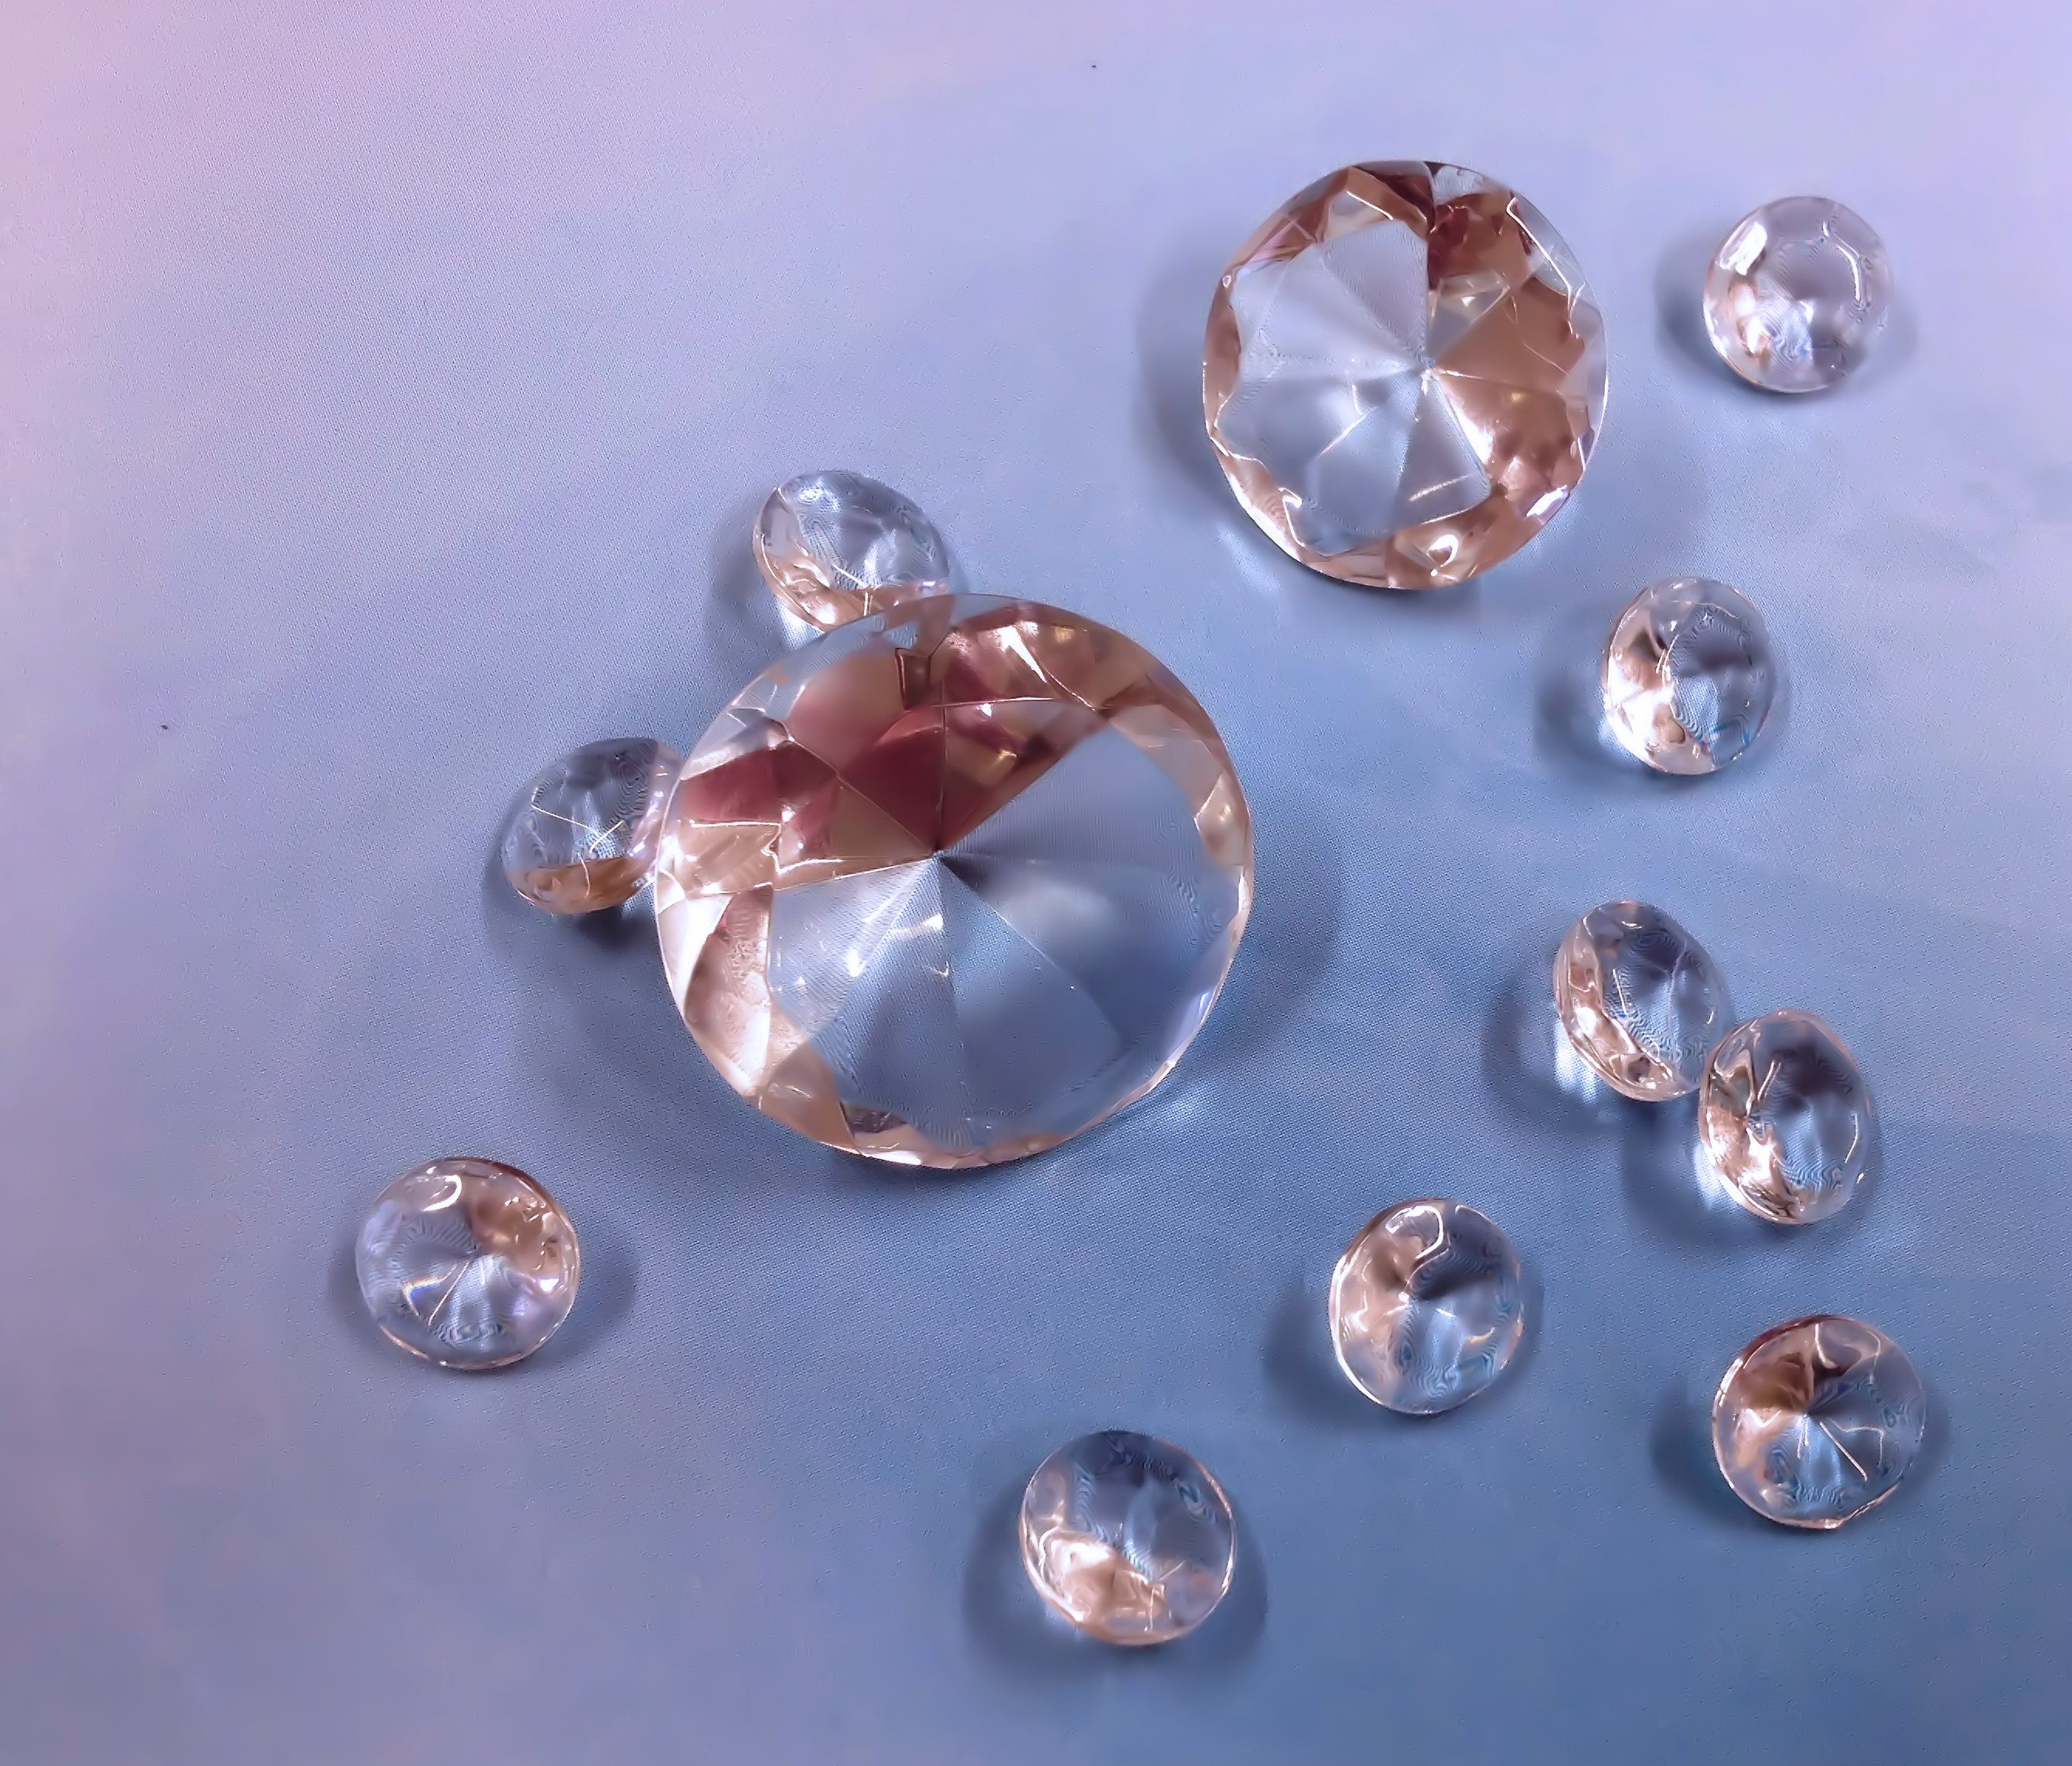 Kristallglas, 24 Stück international JOKA St) Deko-Glas (24 Deko-Diamanten,